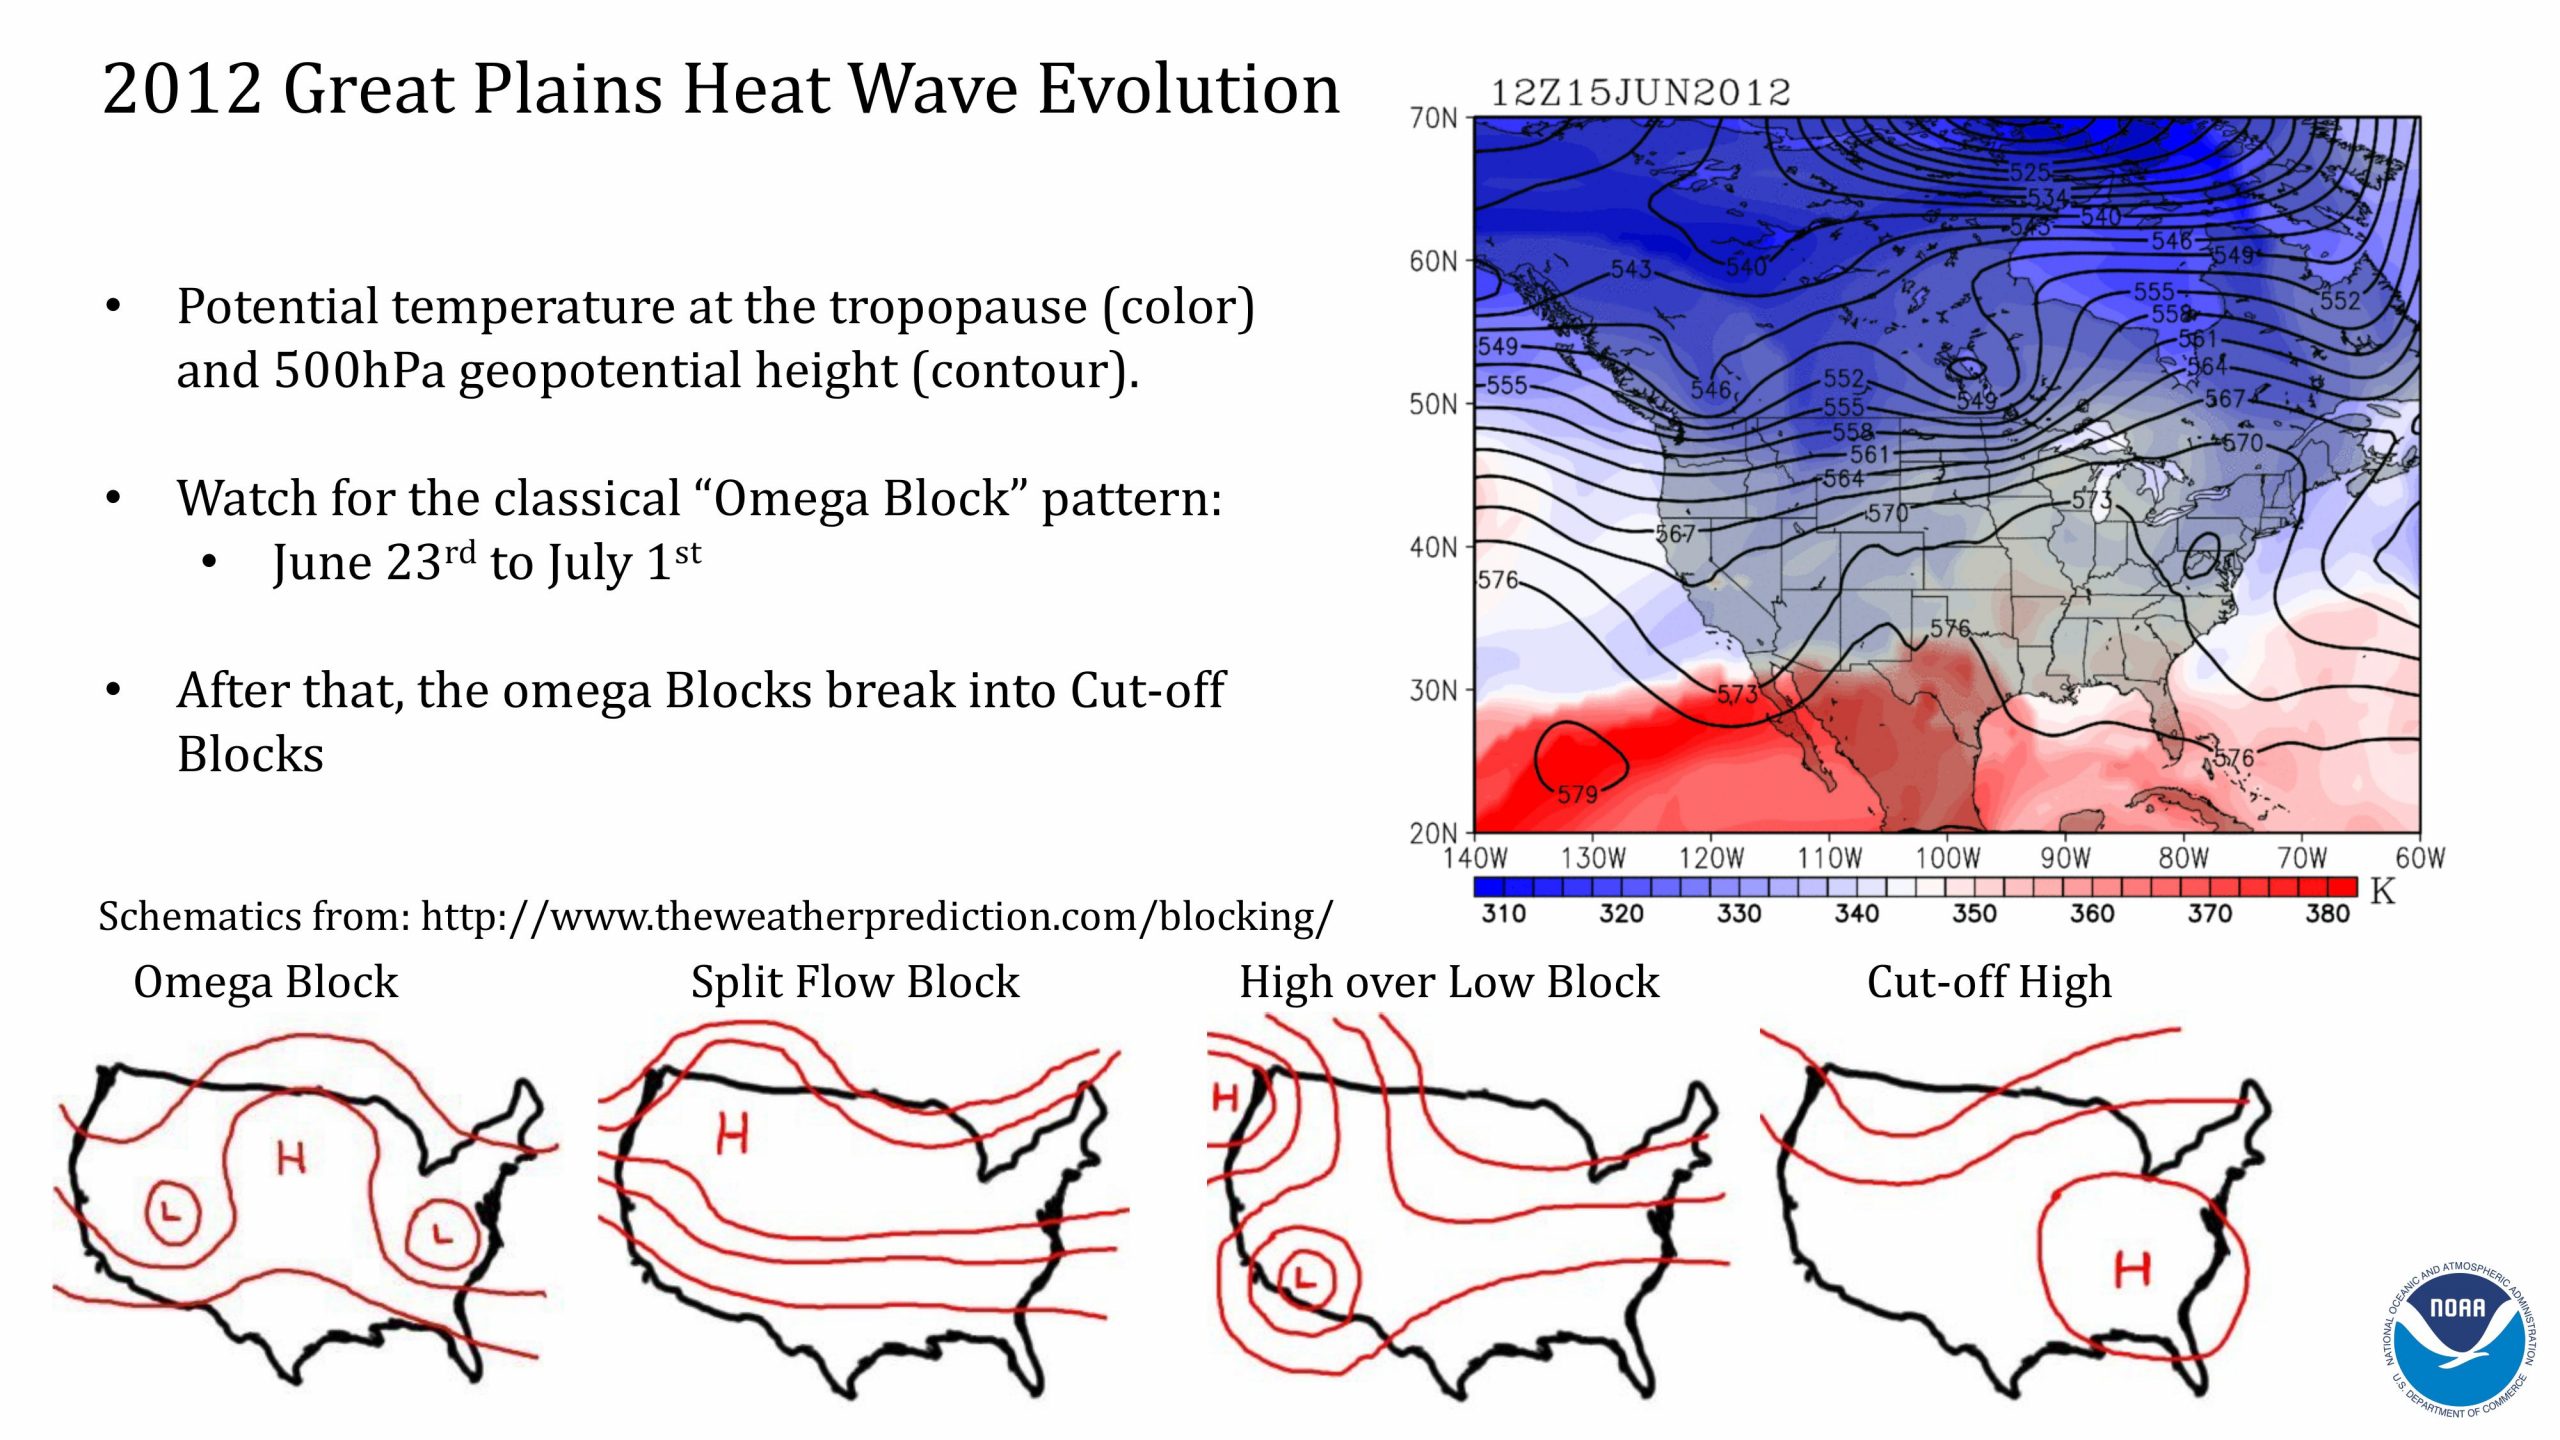 Hosmay Lopez Monsoon and Heat Waves presentation. Slide 7